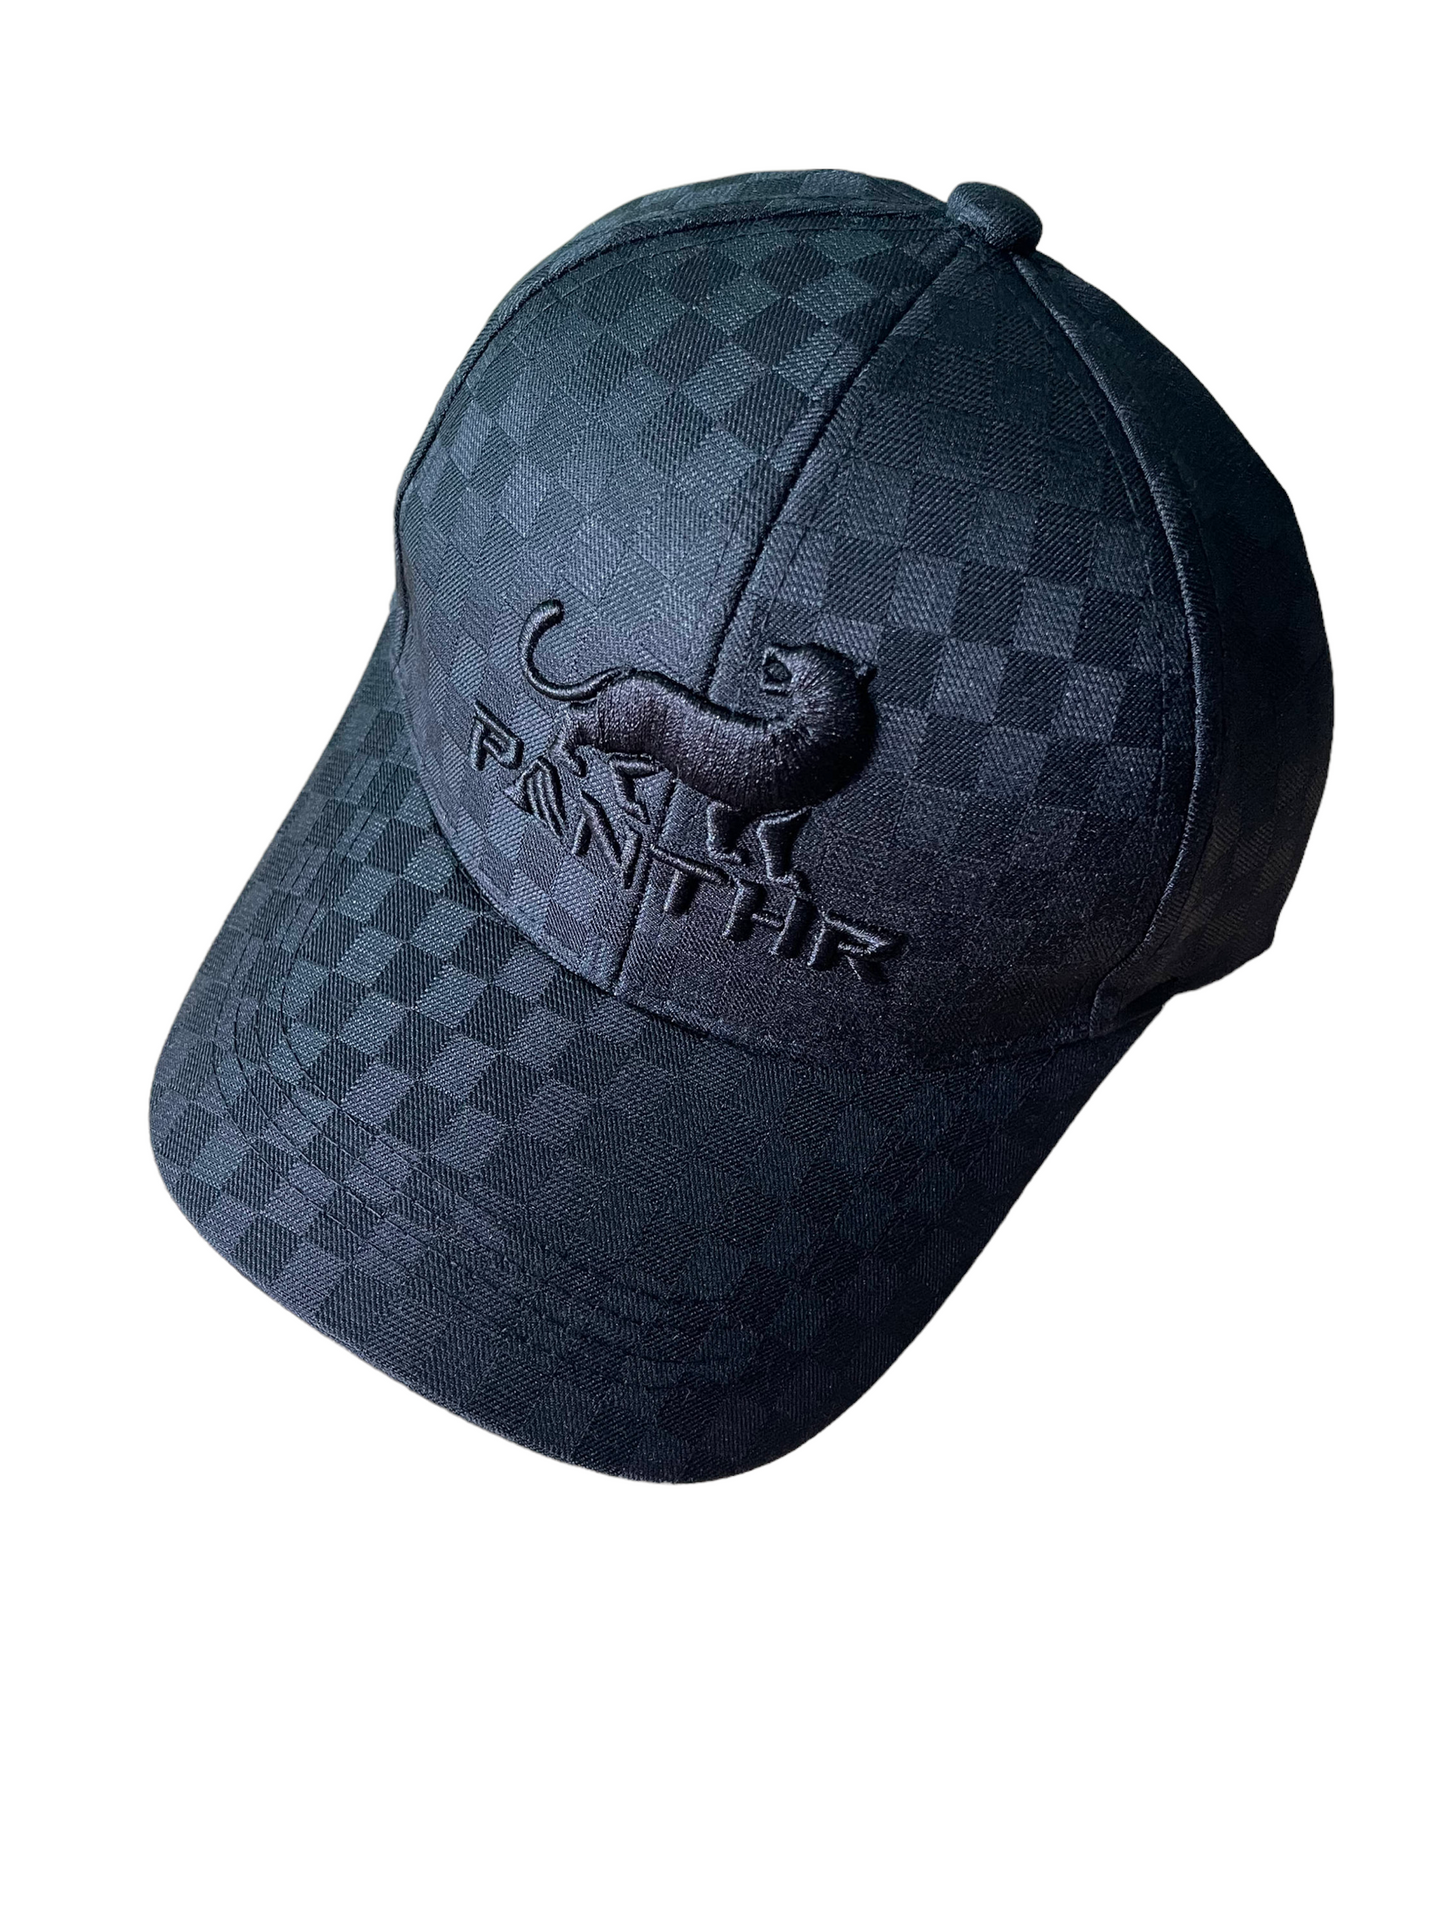 PanthR Black checker Hat